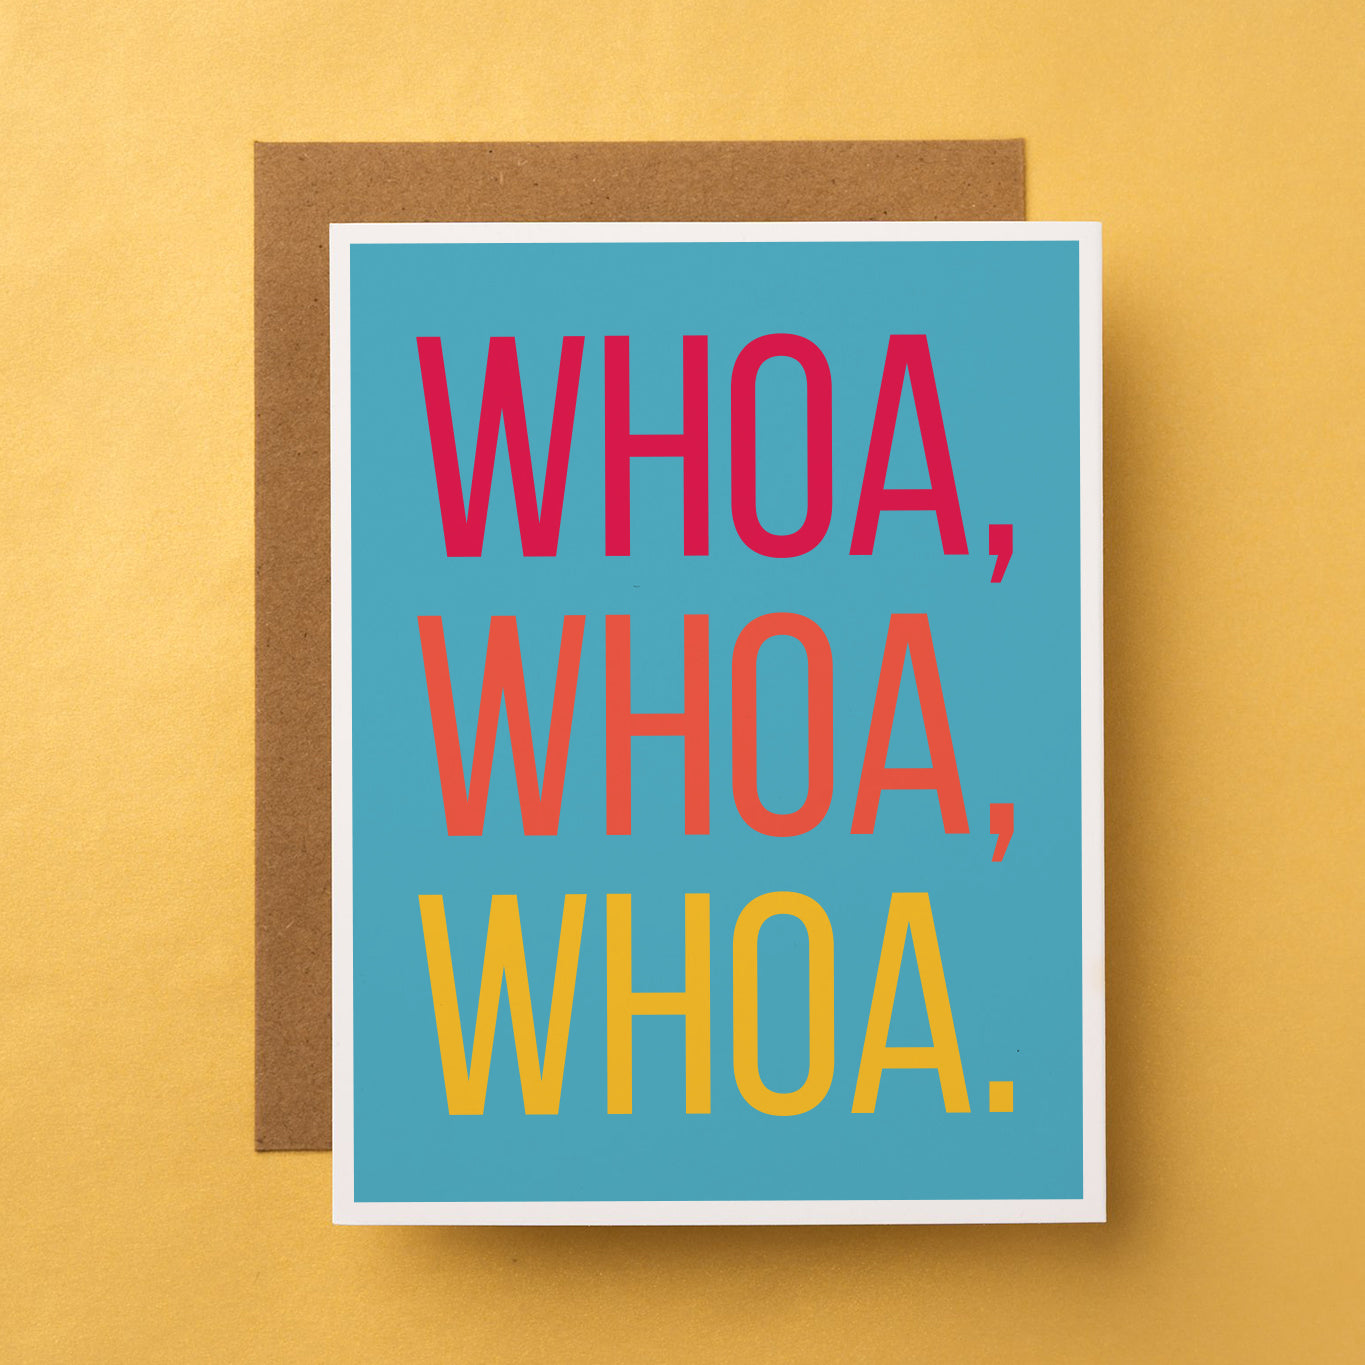 A funny everyday greeting card that reads "Whoa, whoa, whoa."